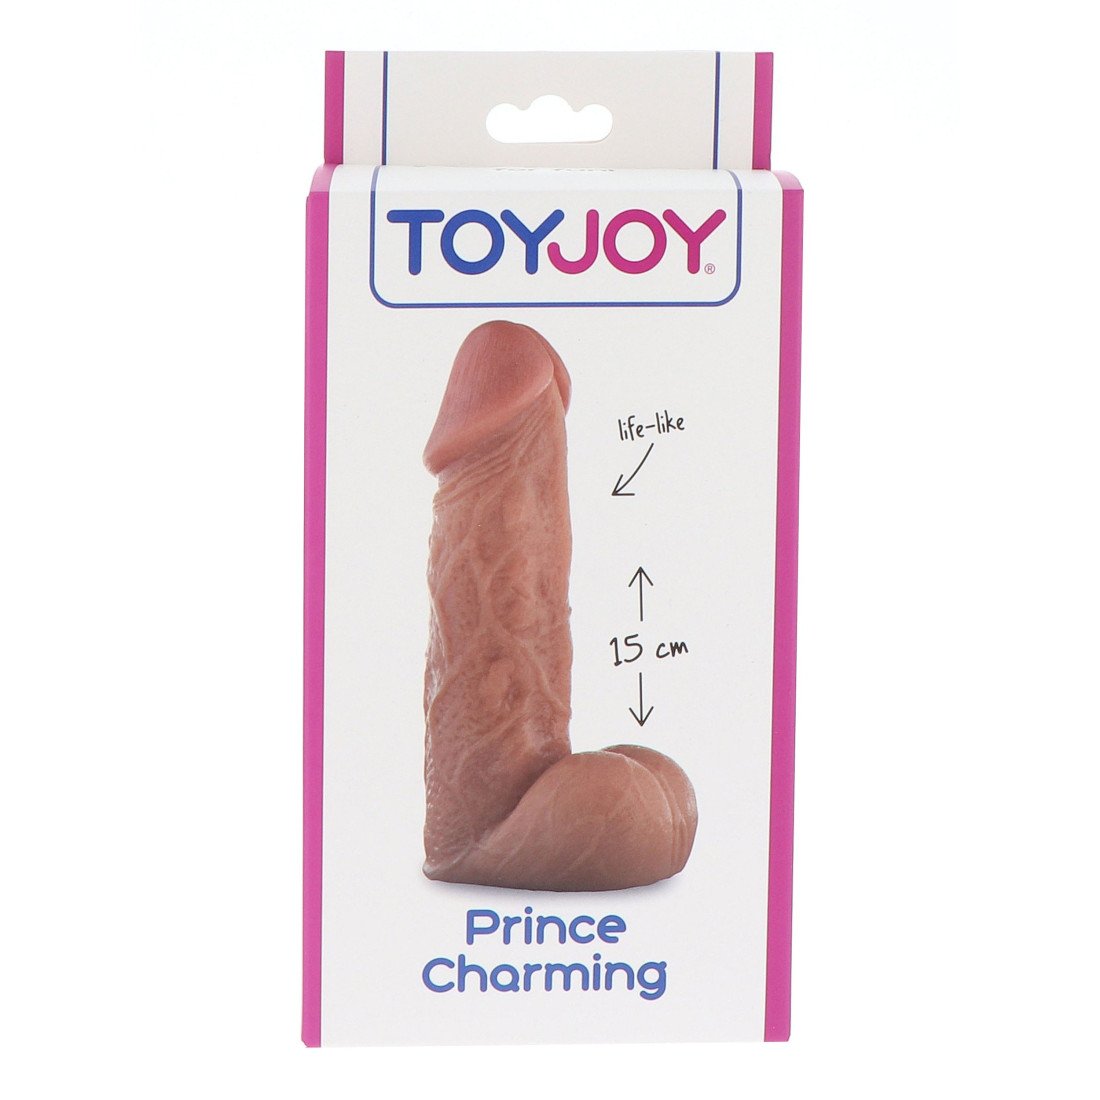 Falo imitatorius „Prince Charming“ - ToyJoy